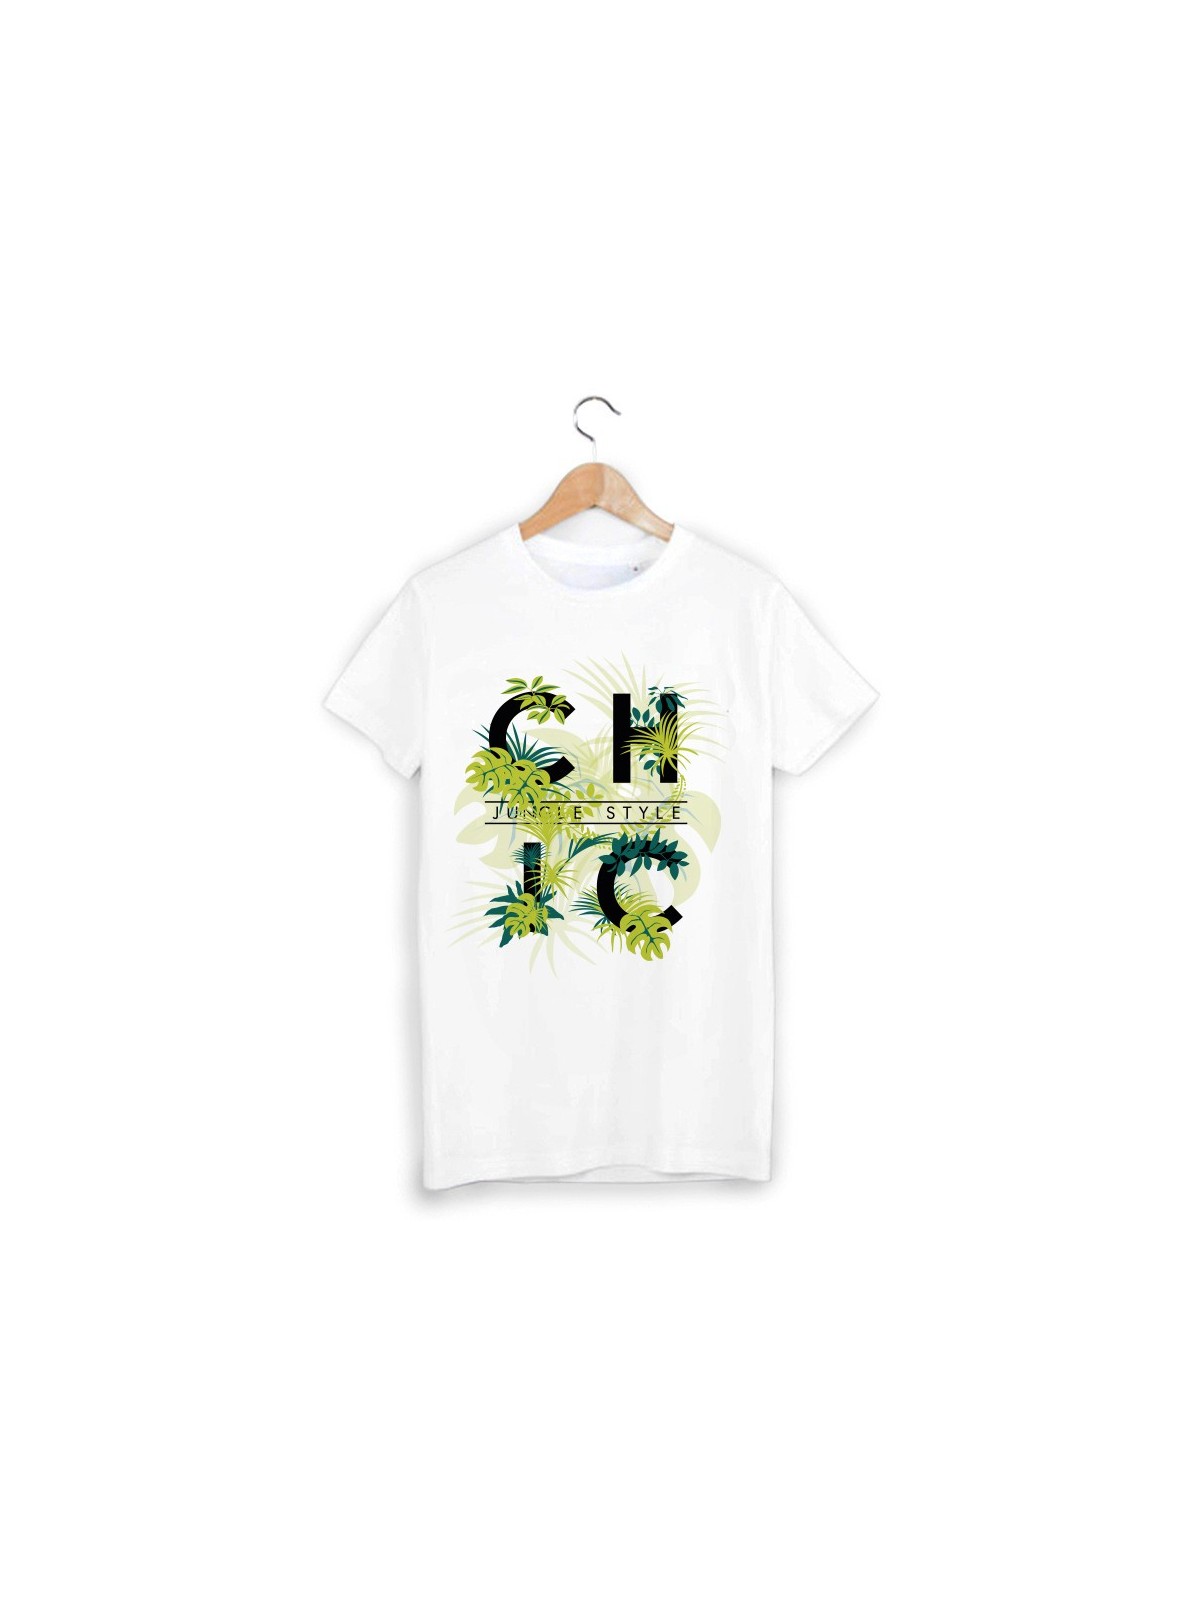 T-Shirt chic jungle ref 1509